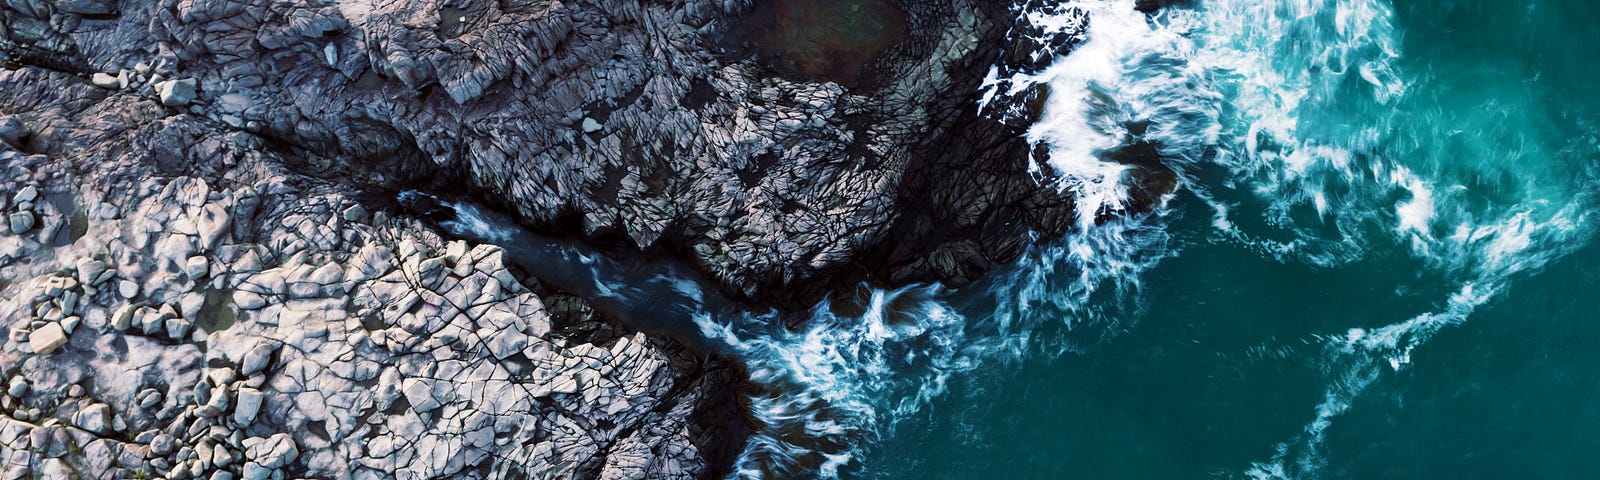 ocean waves crashing up against rocks